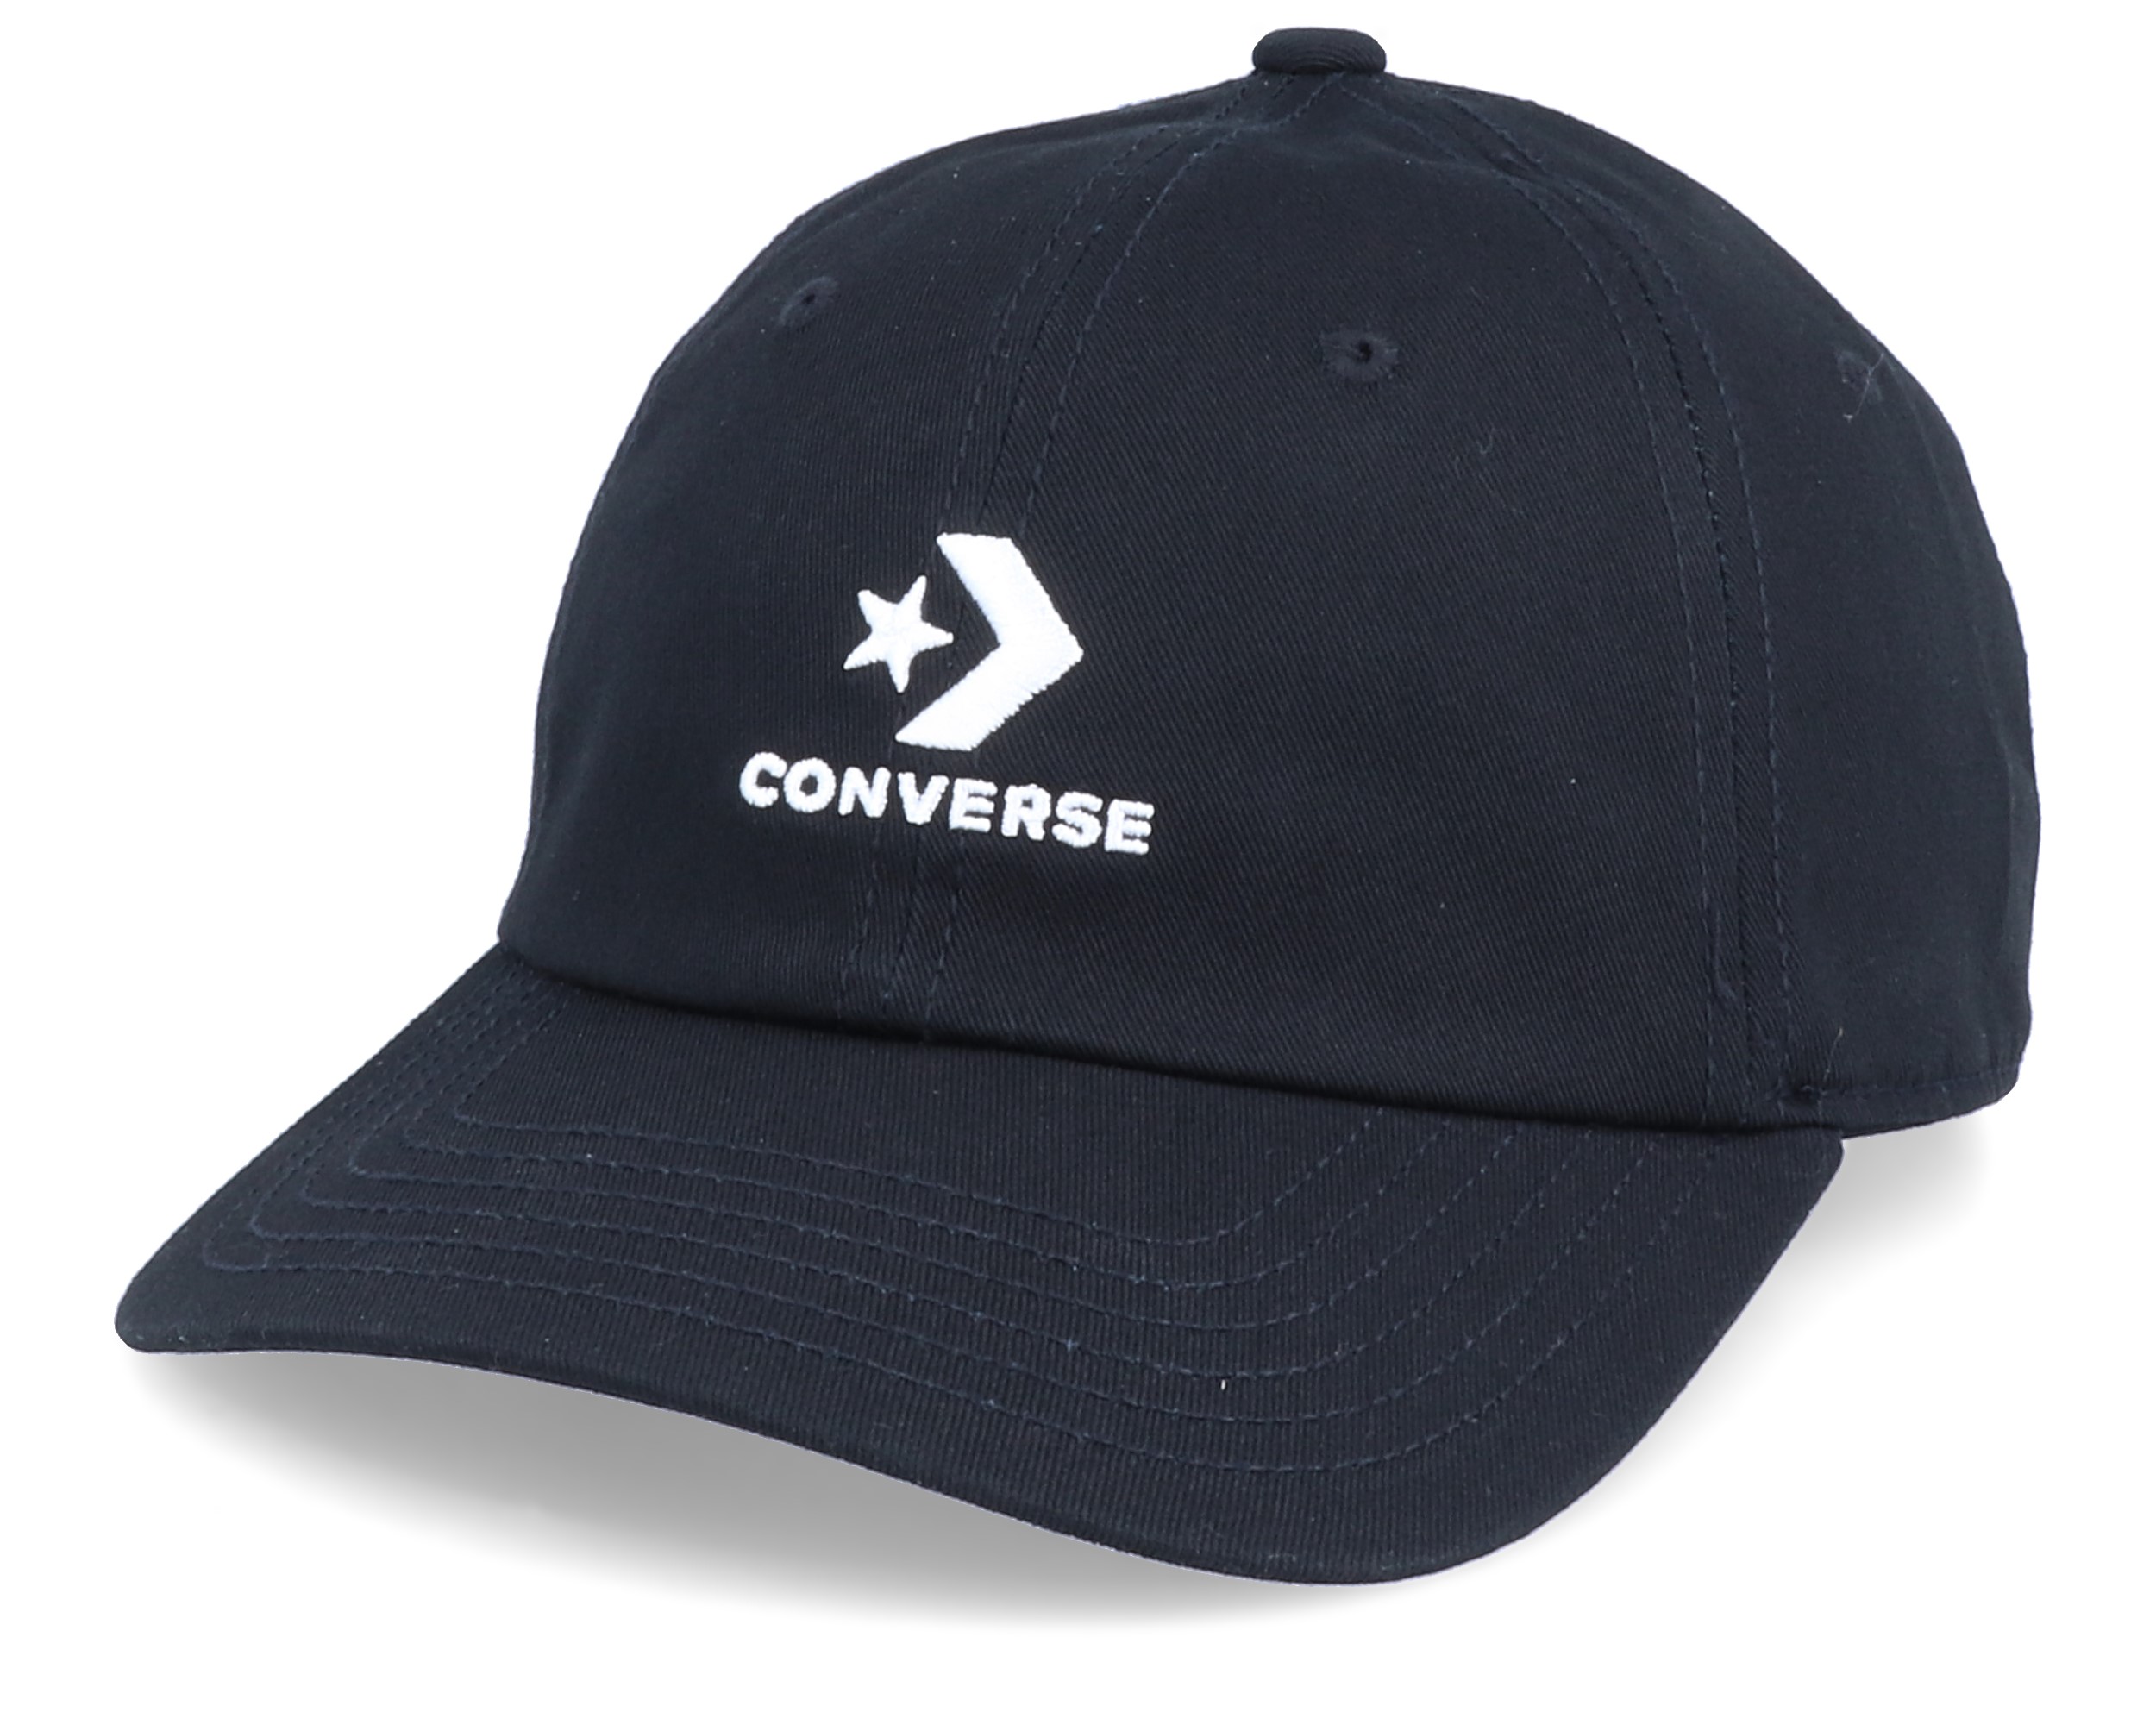 Lock Up Baseball Black/White Adjustable - Converse cap